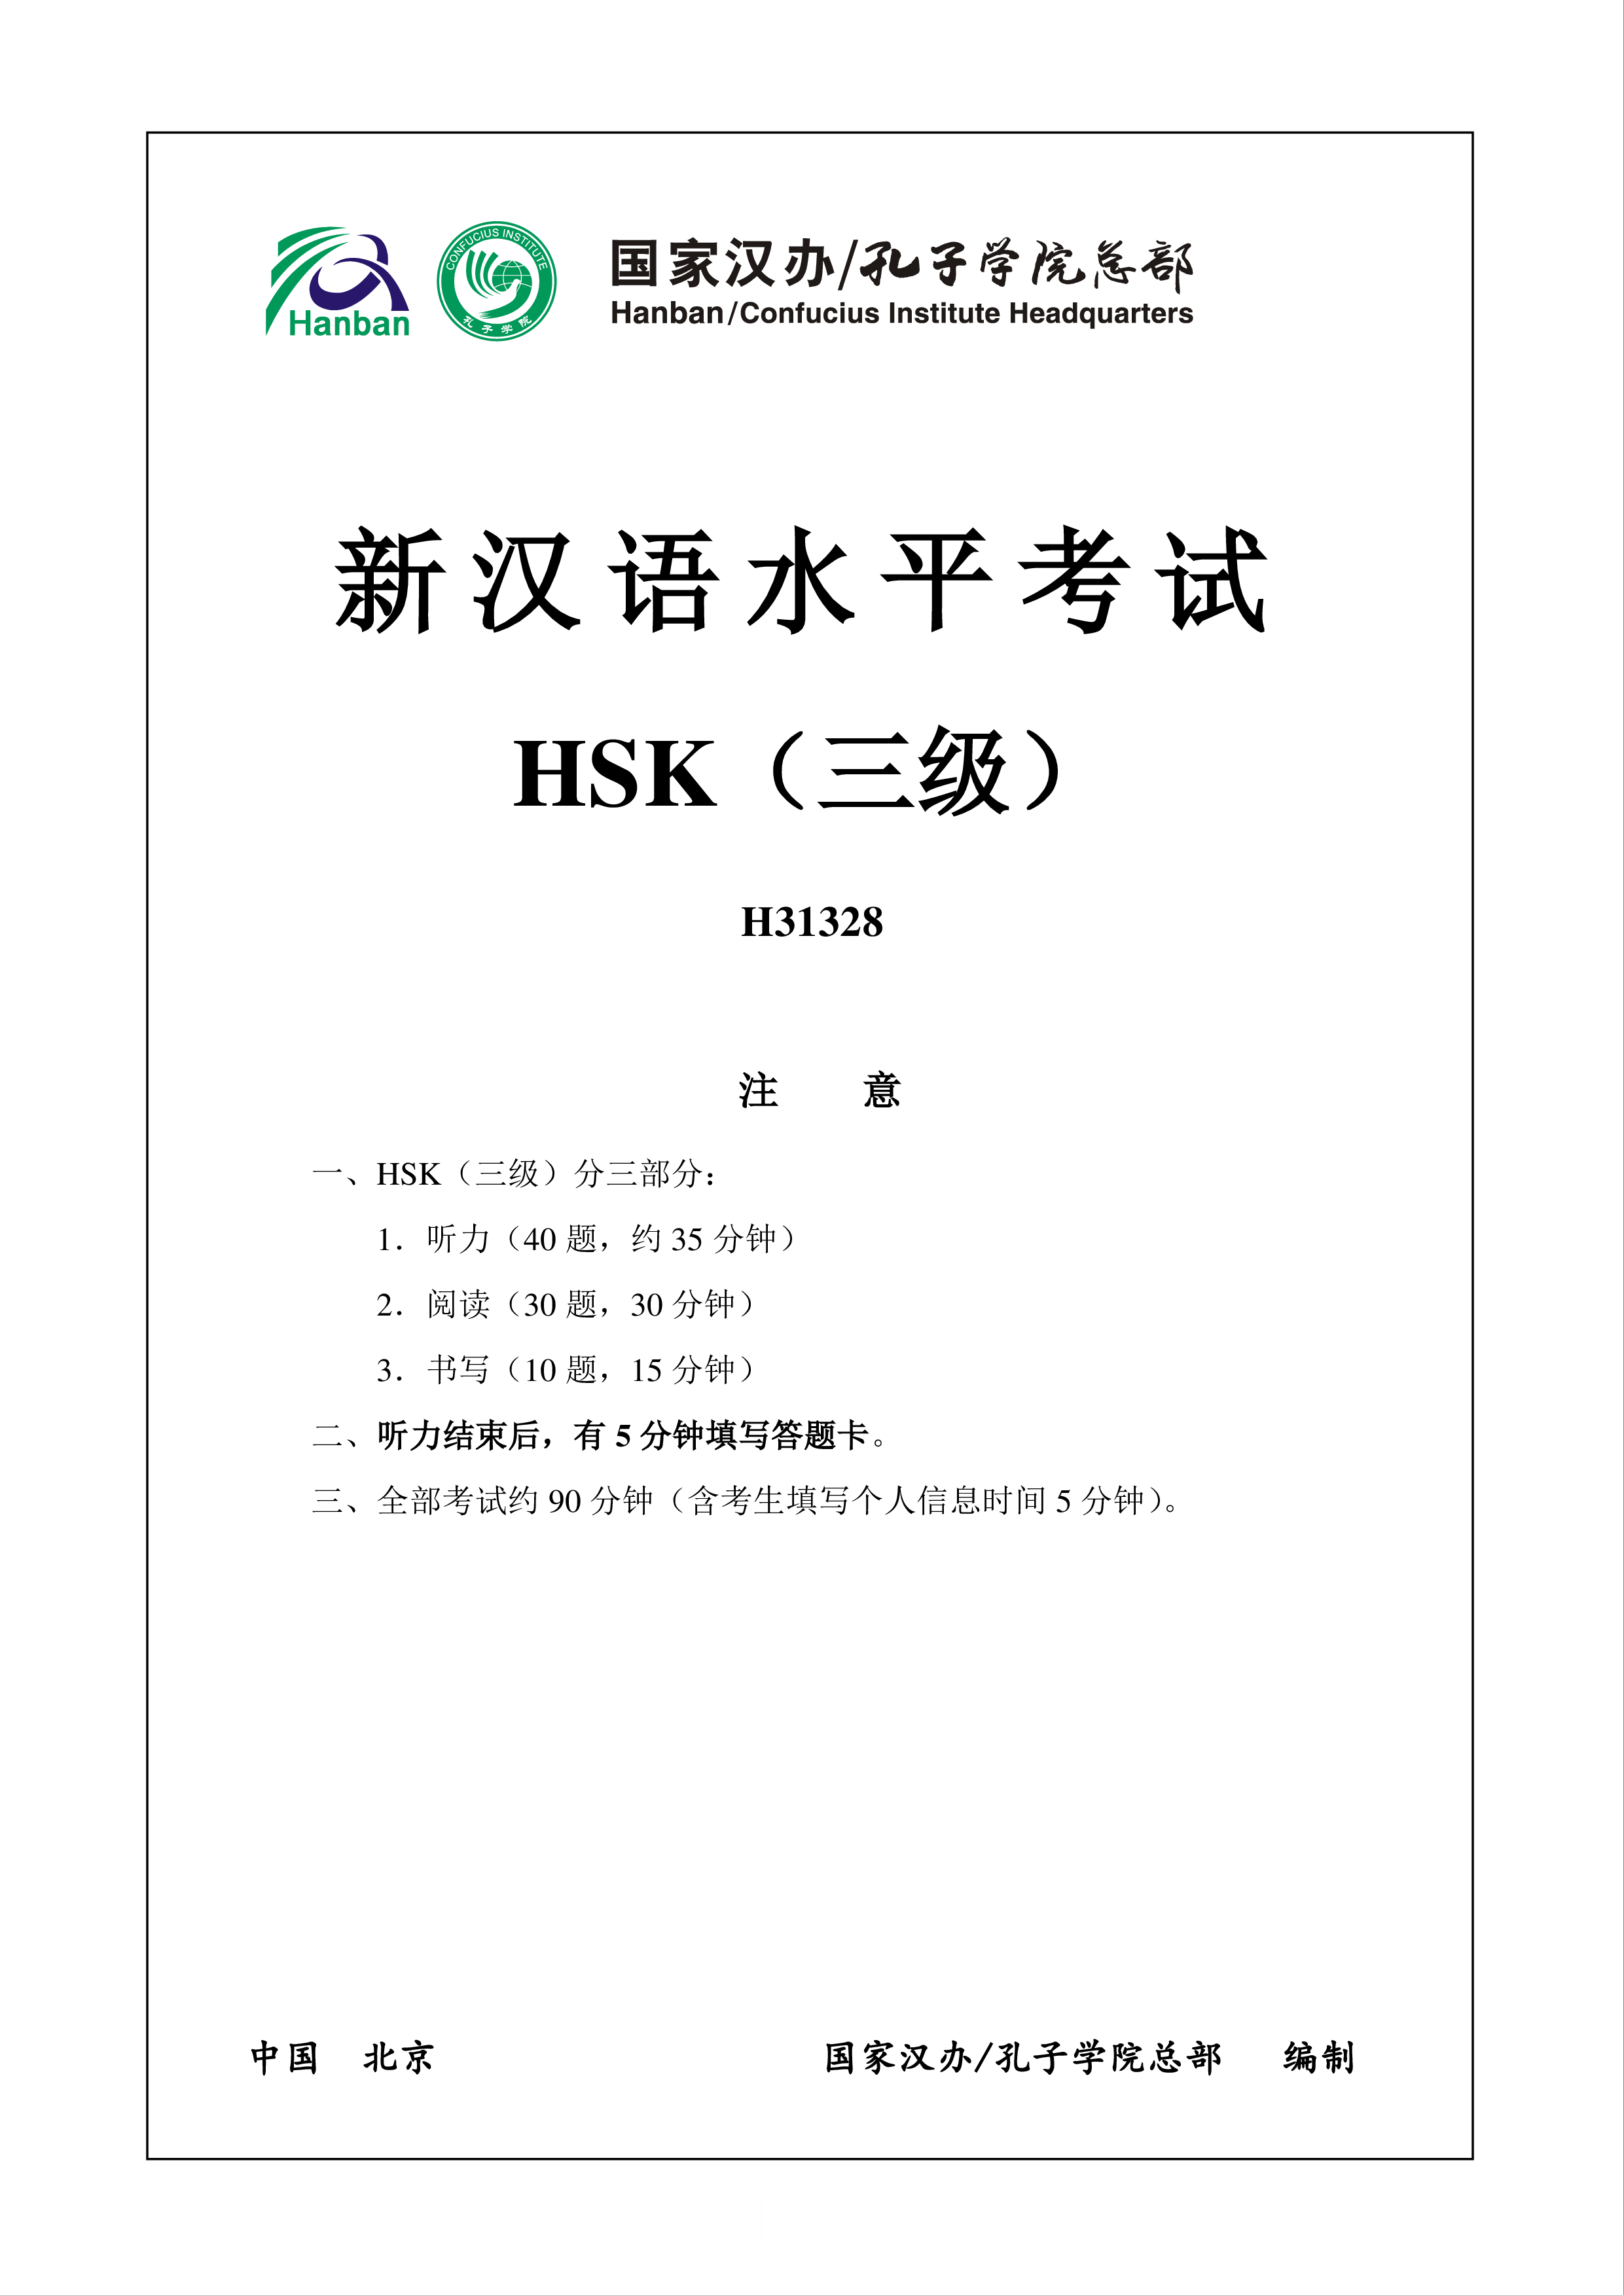 HSK3 H31328 Exam 模板